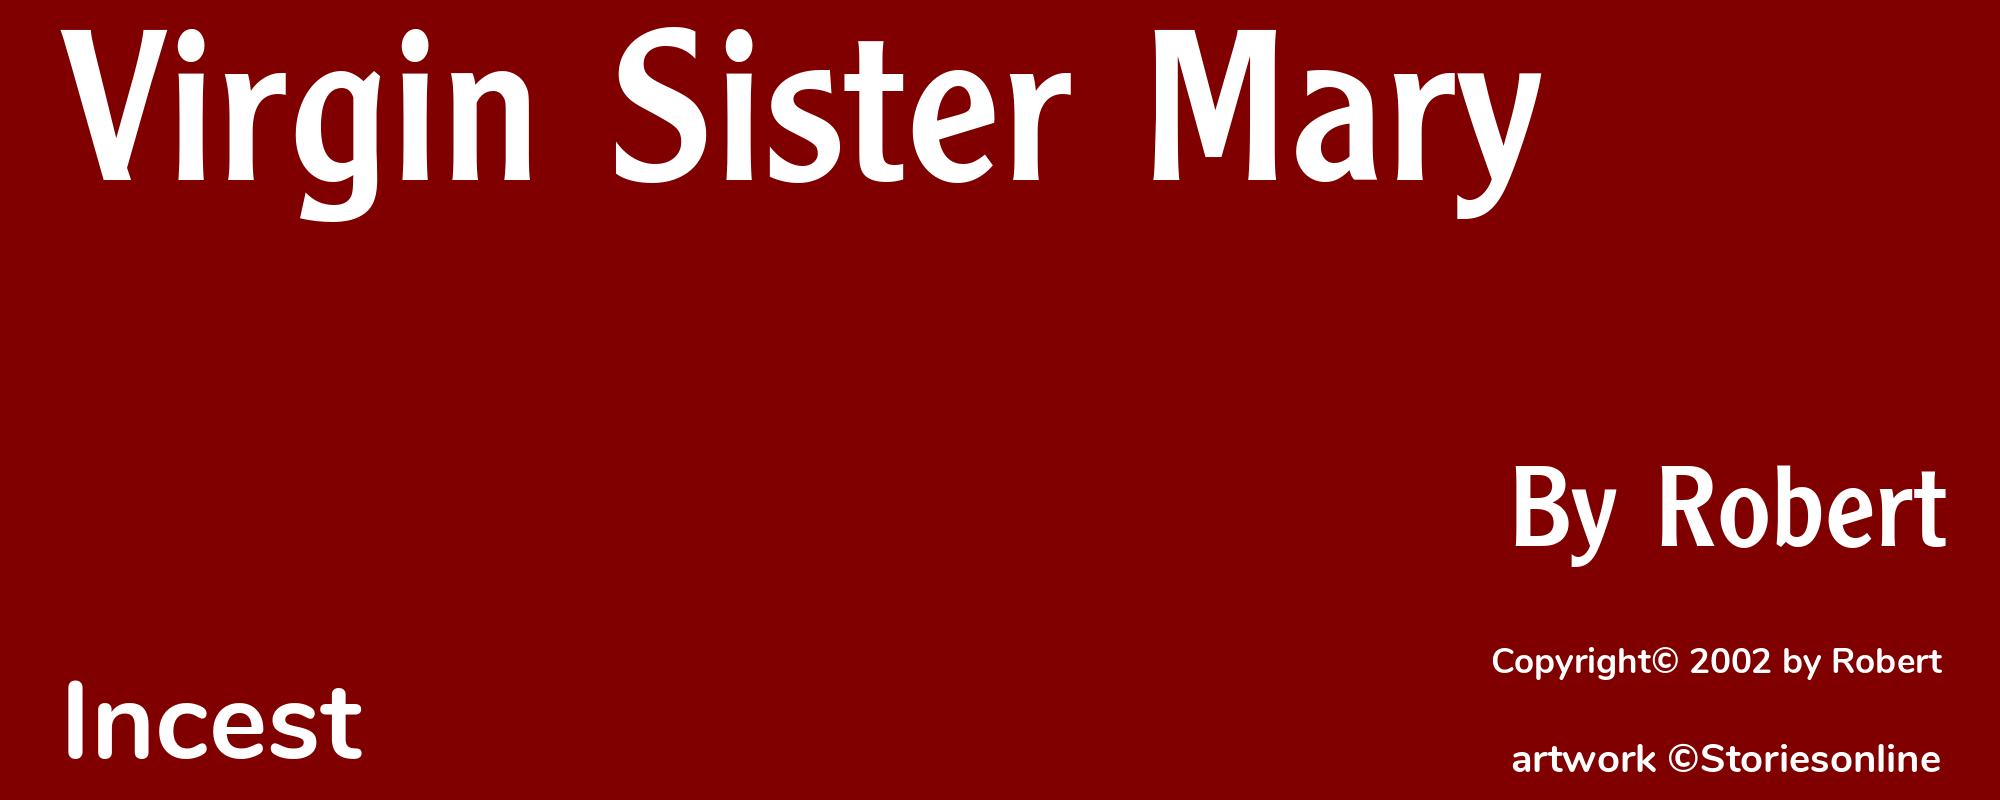 Virgin Sister Mary - Cover